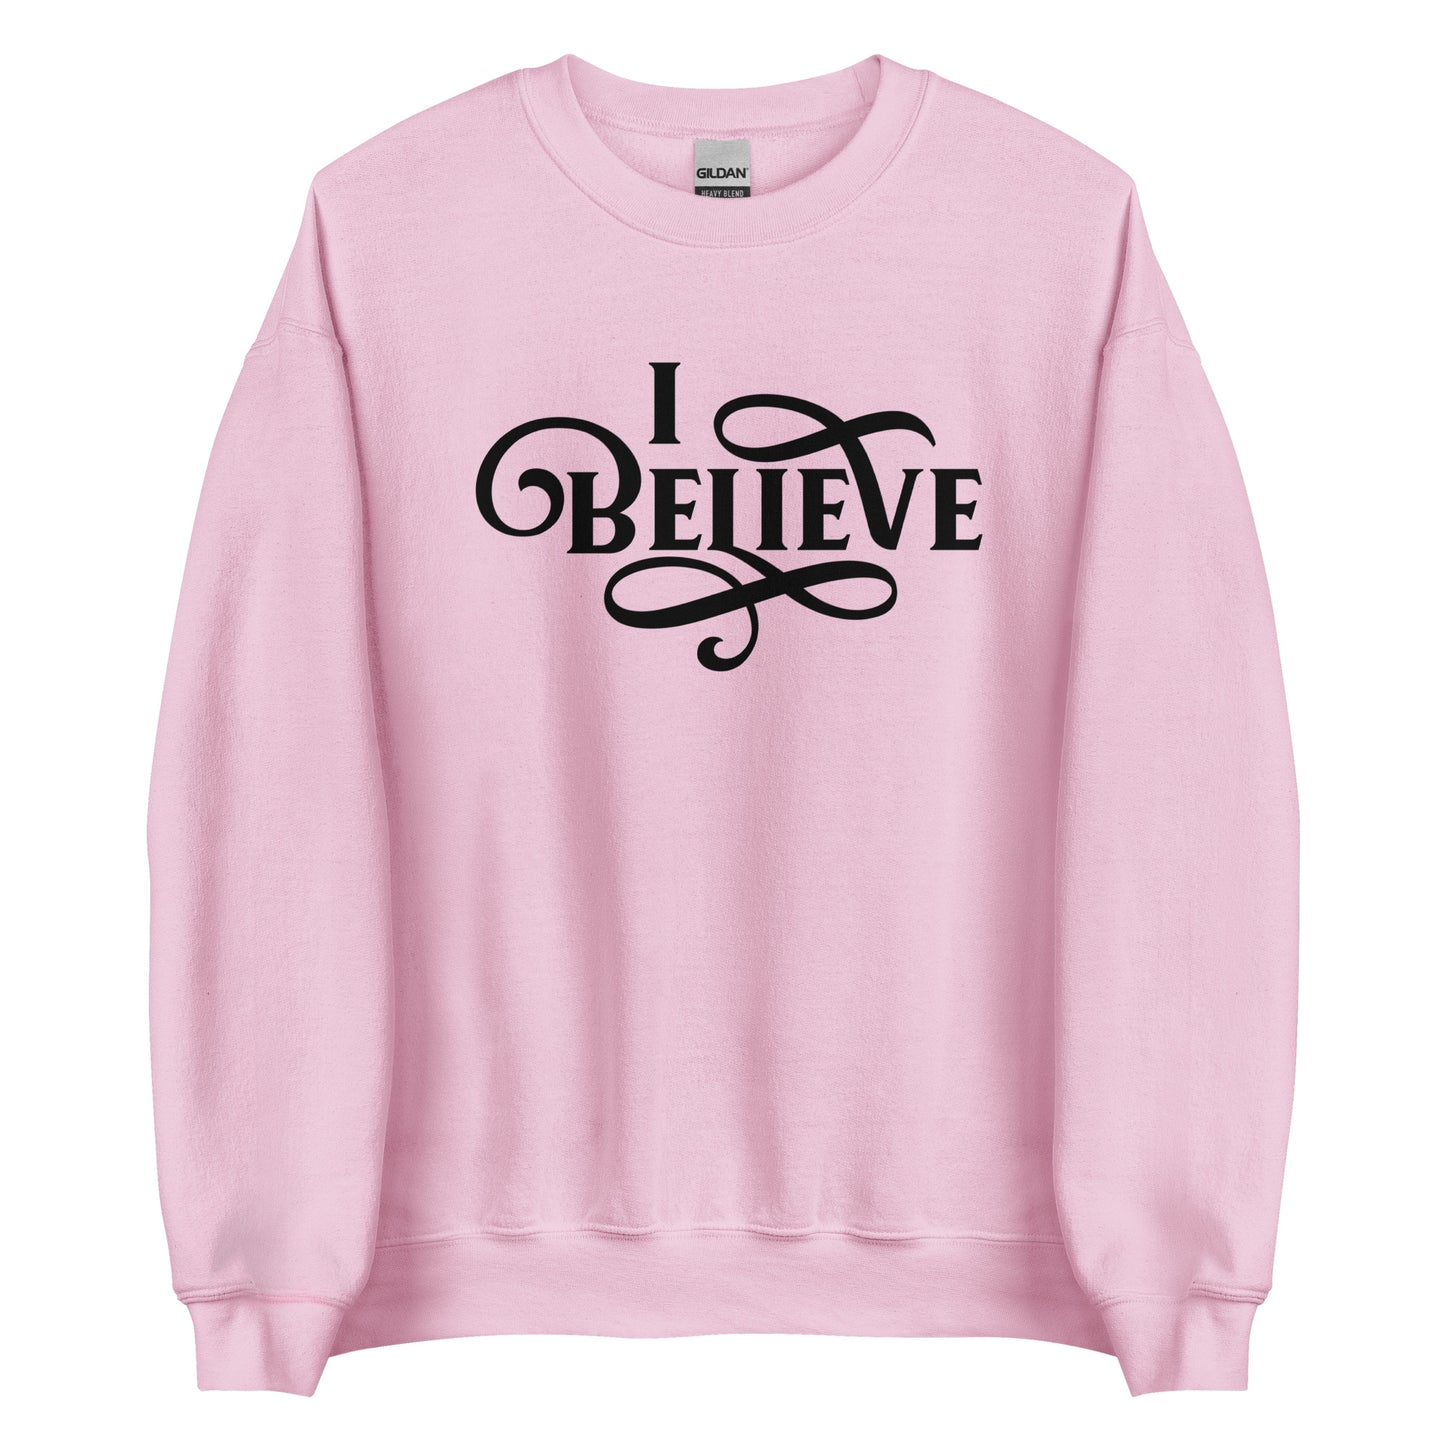 I Believe Swirl Christian aesthetic Jesus believer design printed in black on soft light pink unisex crewneck sweatshirt for women, great gift for her